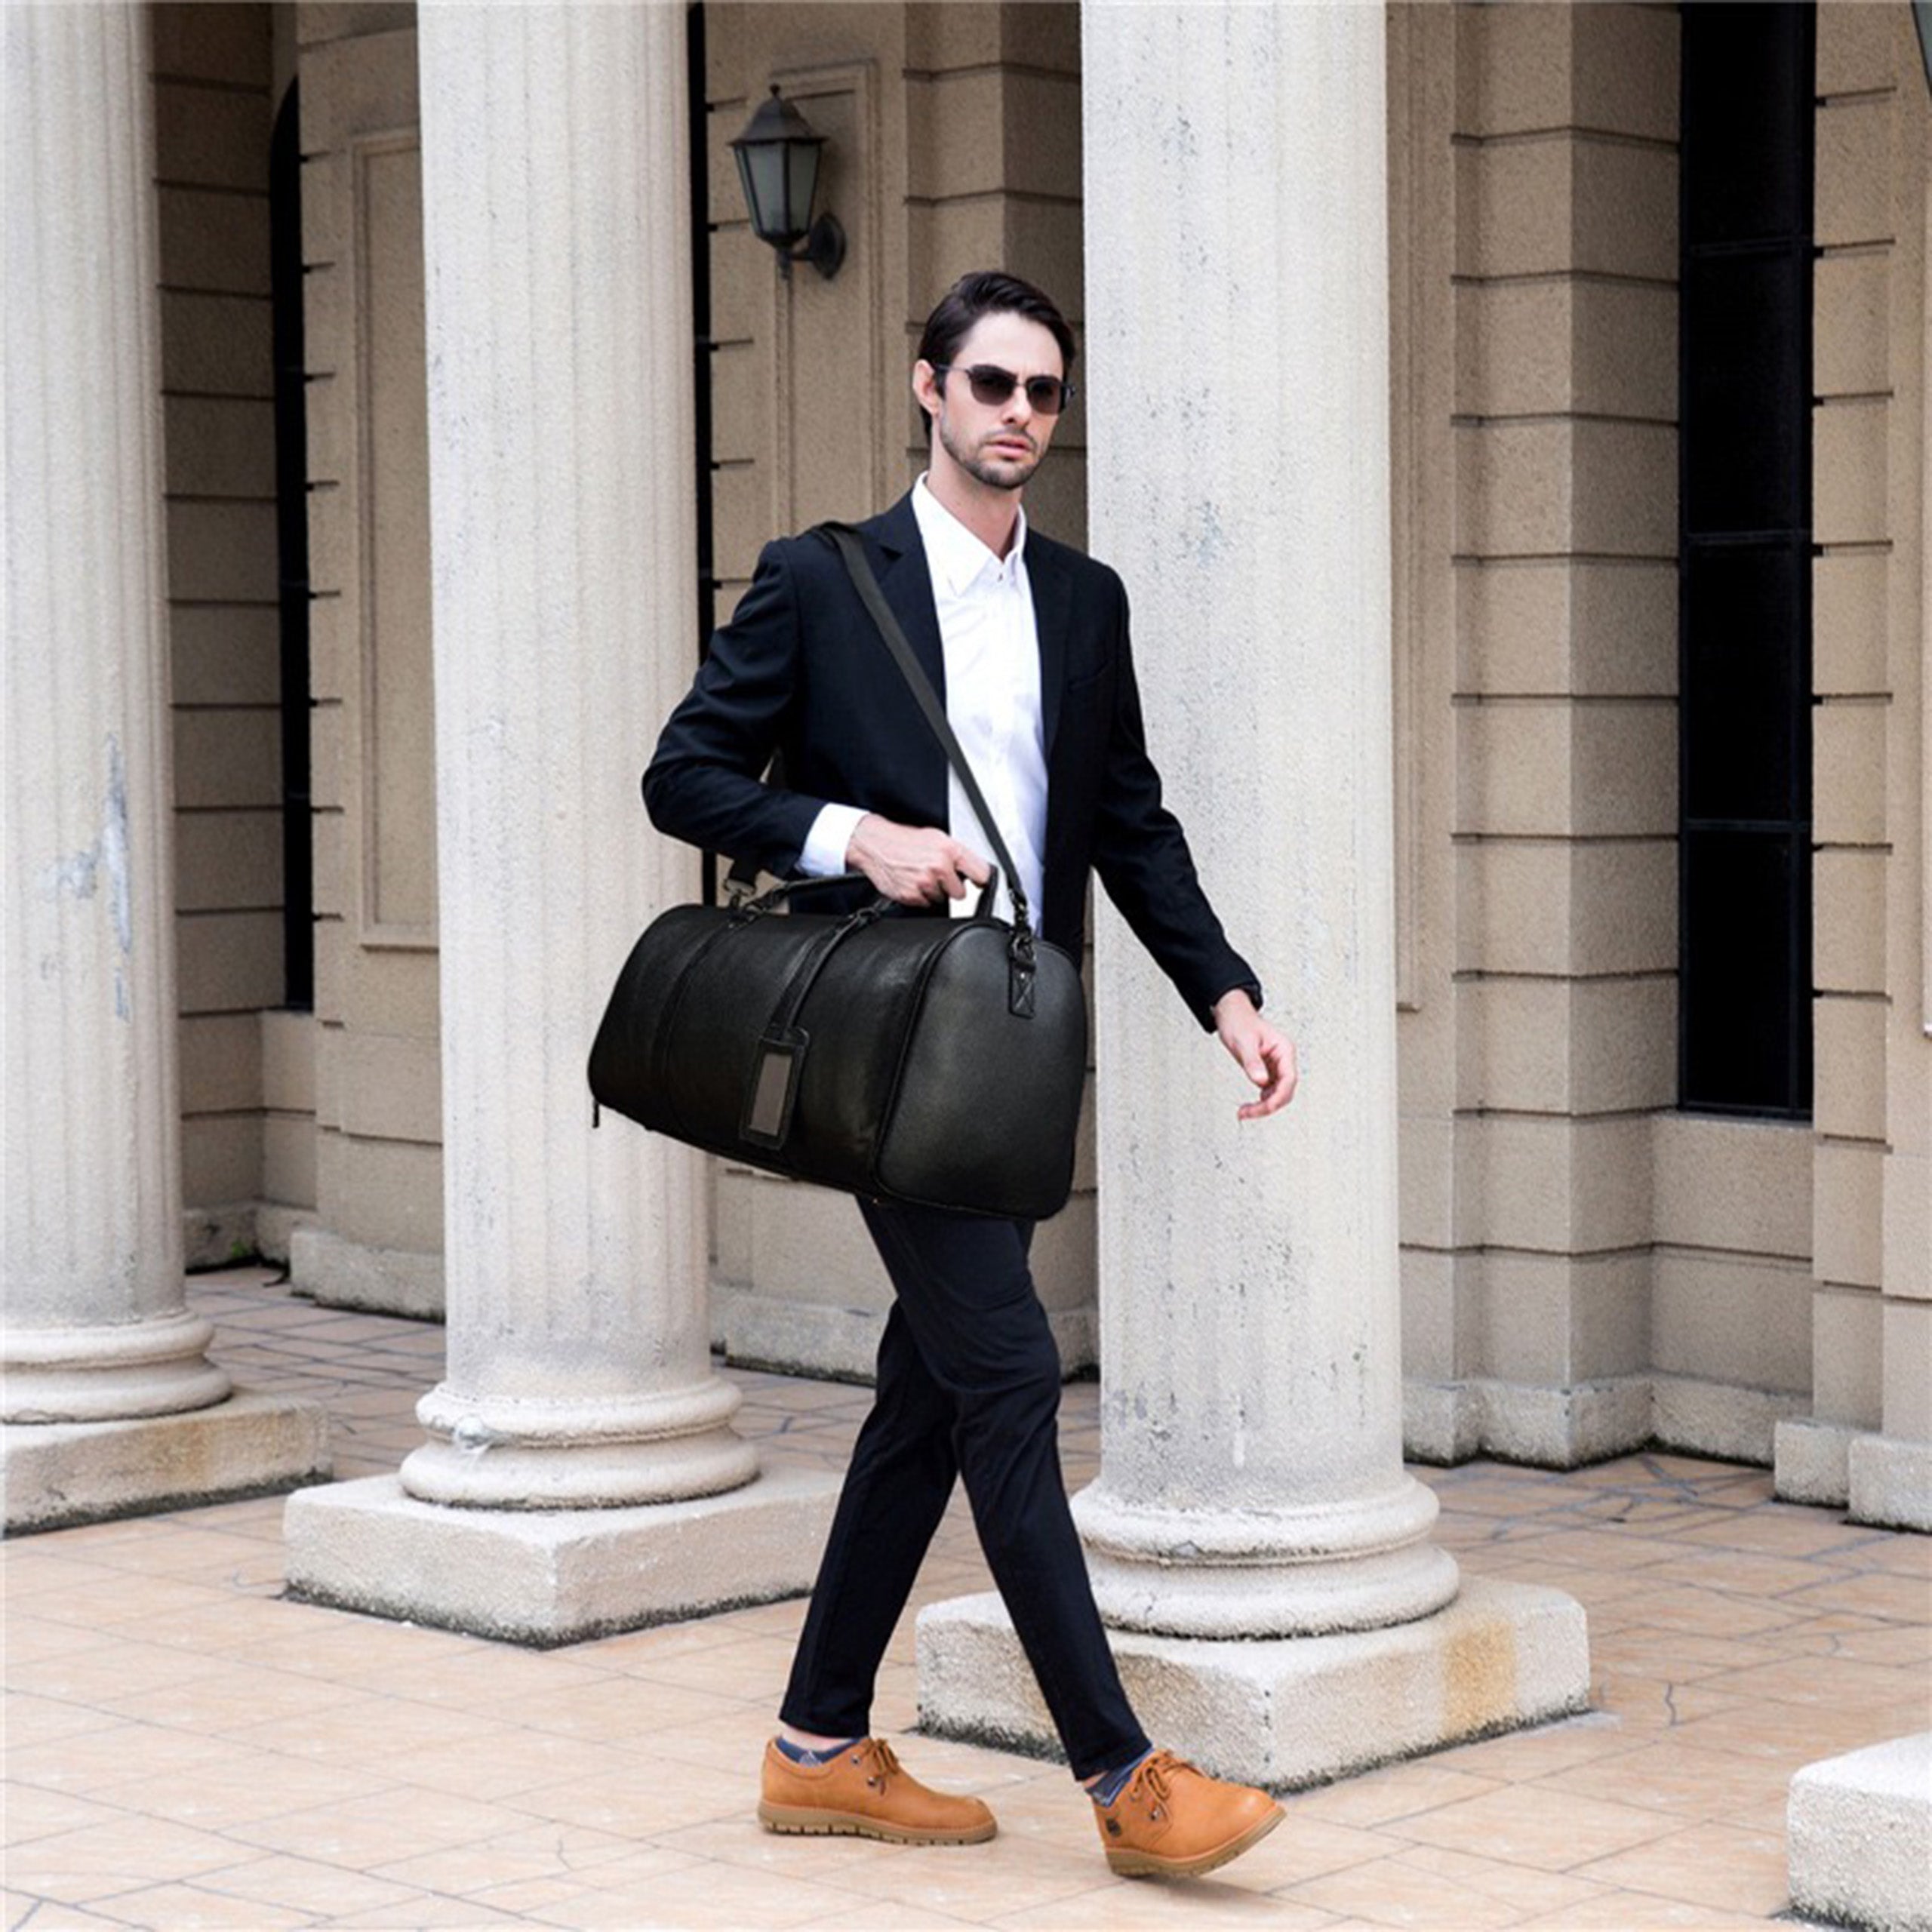 PRETTYMS Men's Genuine Leather Handbag Bag The Bento Bag Classic Carry-On Luggage Duffel Bag Travel Luggage Bag For Men